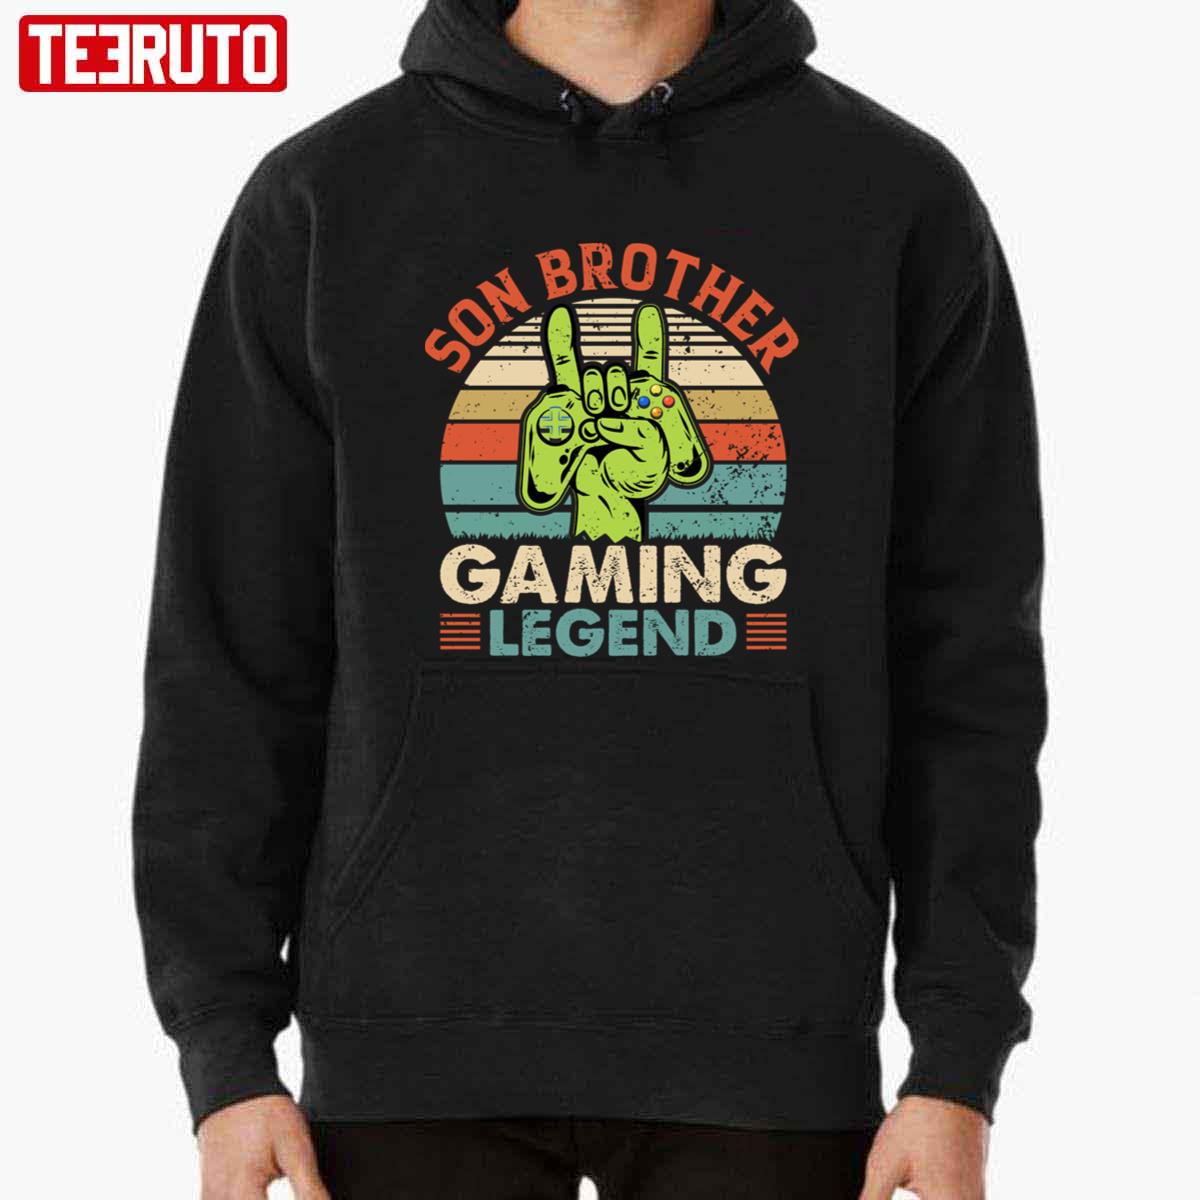 Retro Son Brother Gaming Legend Unisex T-Shirt